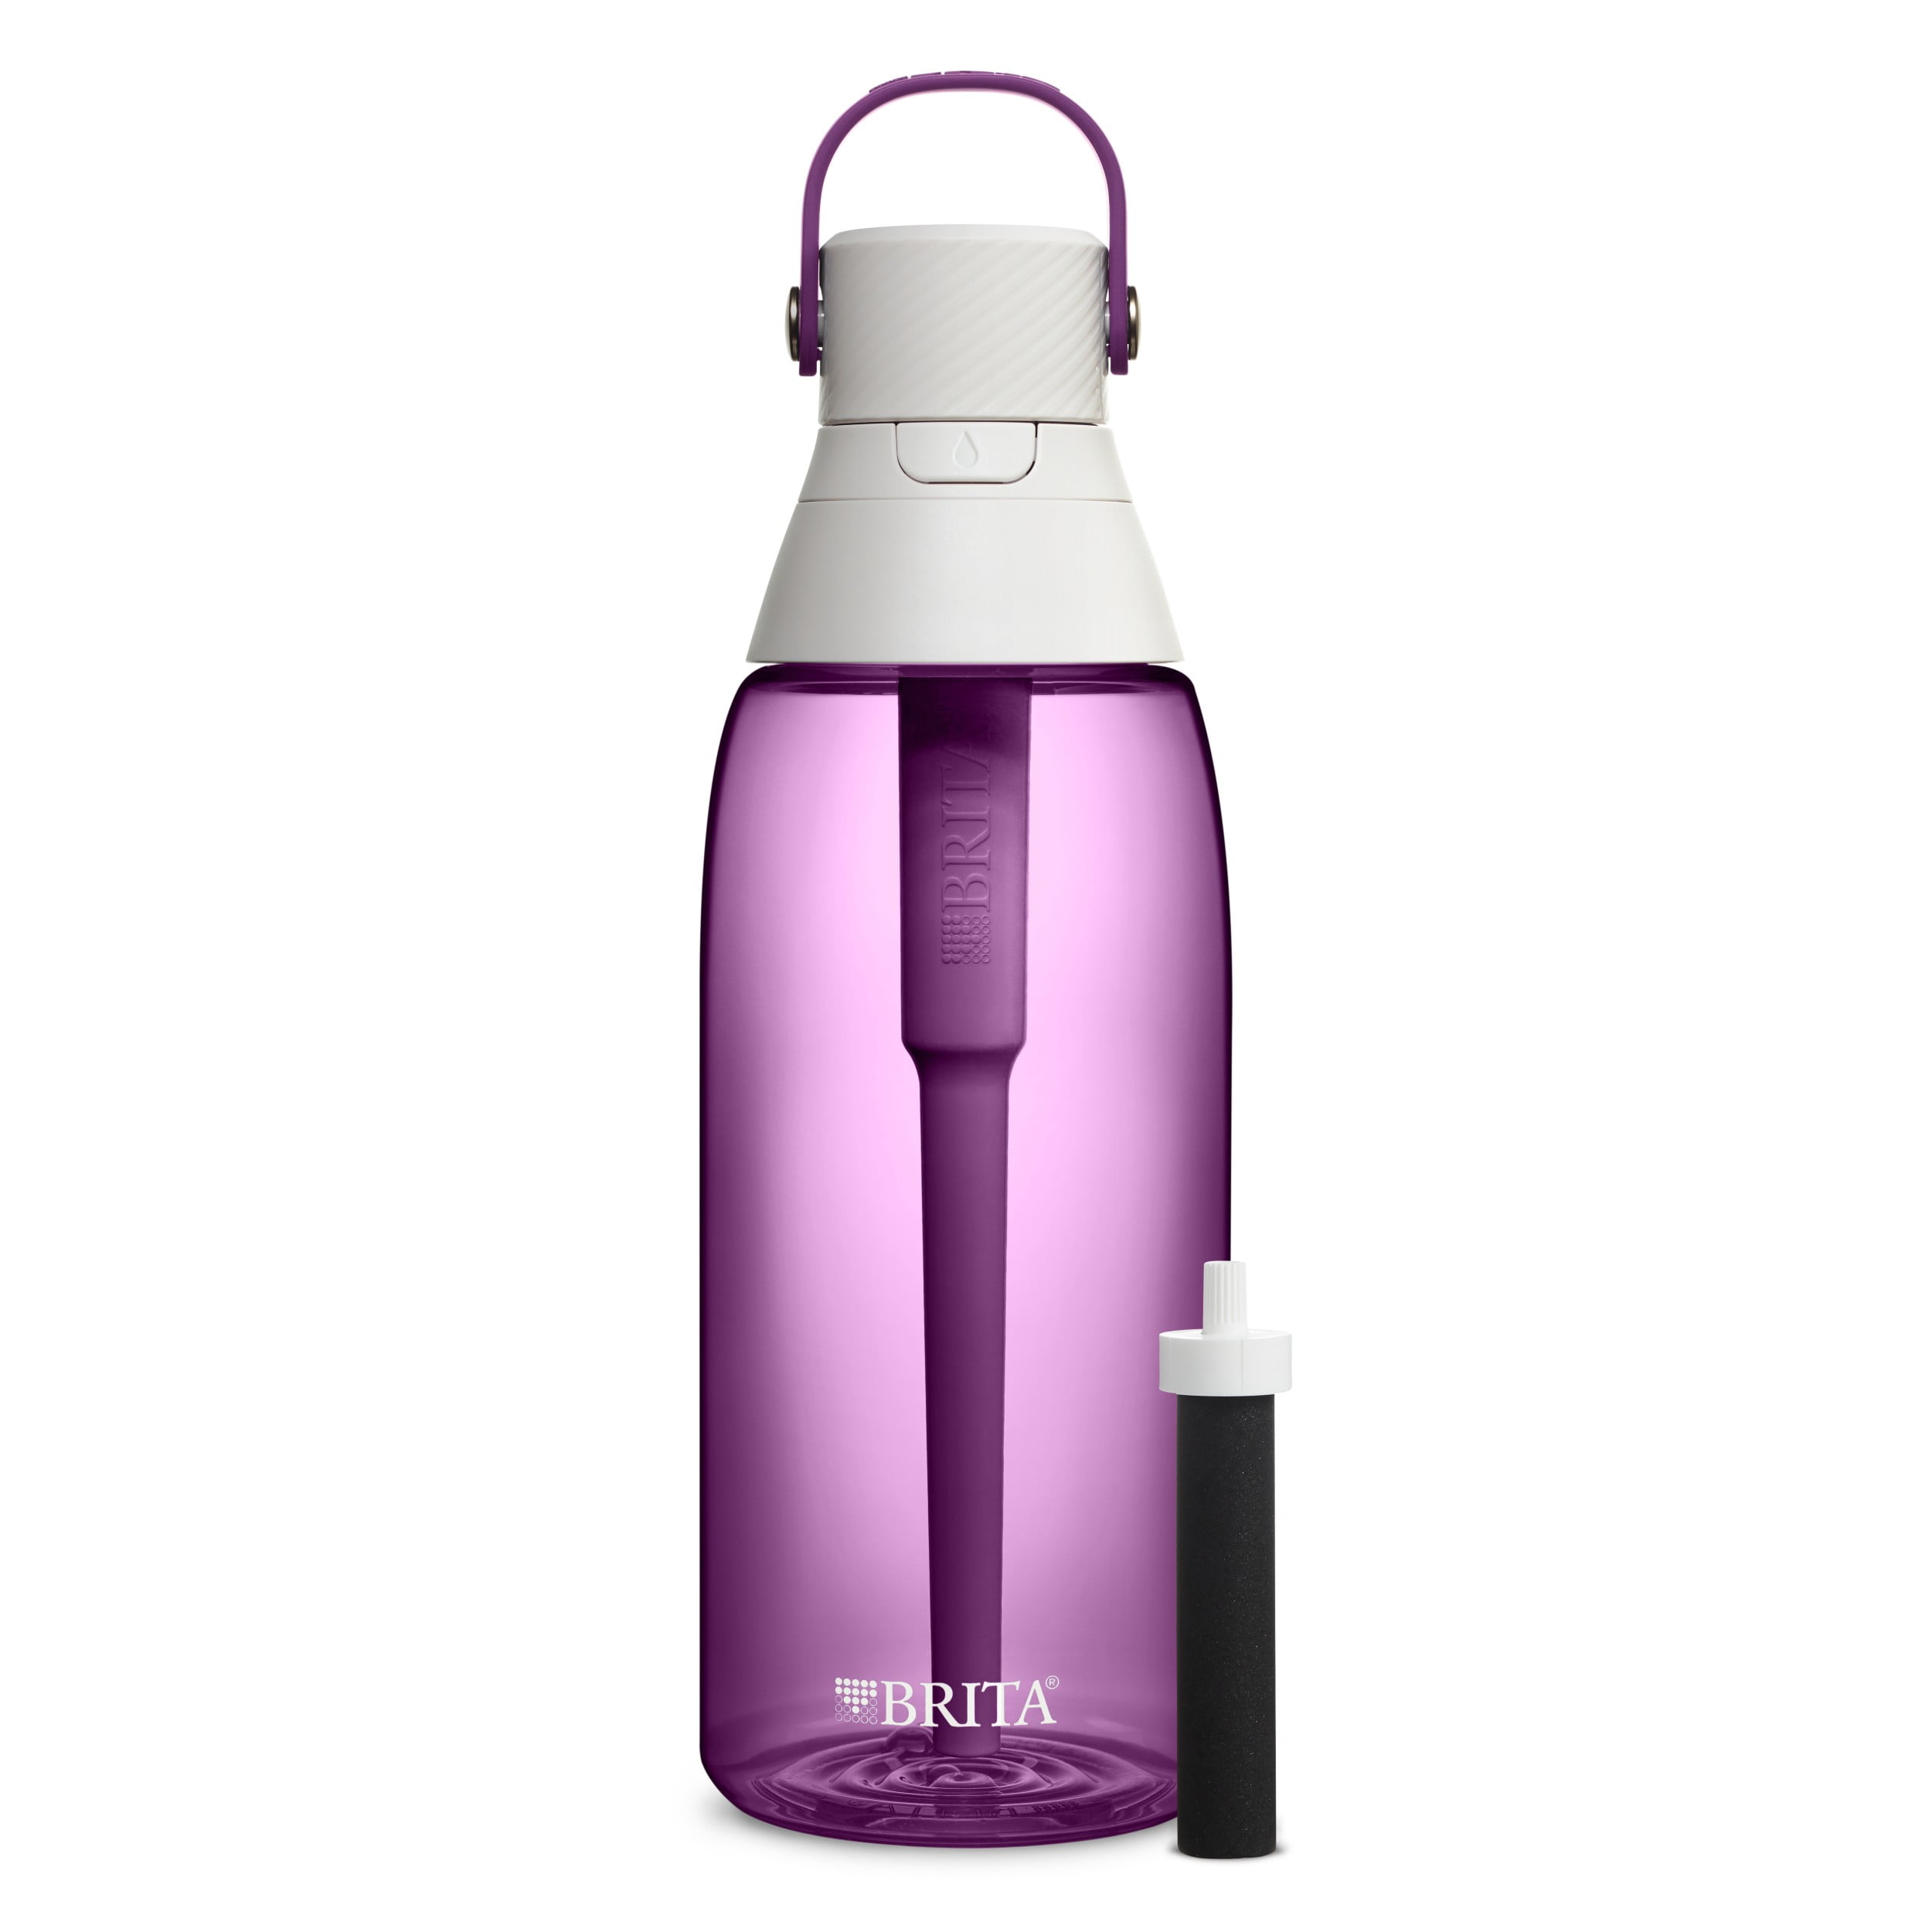 Brita Premium Leak Proof Filtered Water Bottle, Orchid, 36 oz